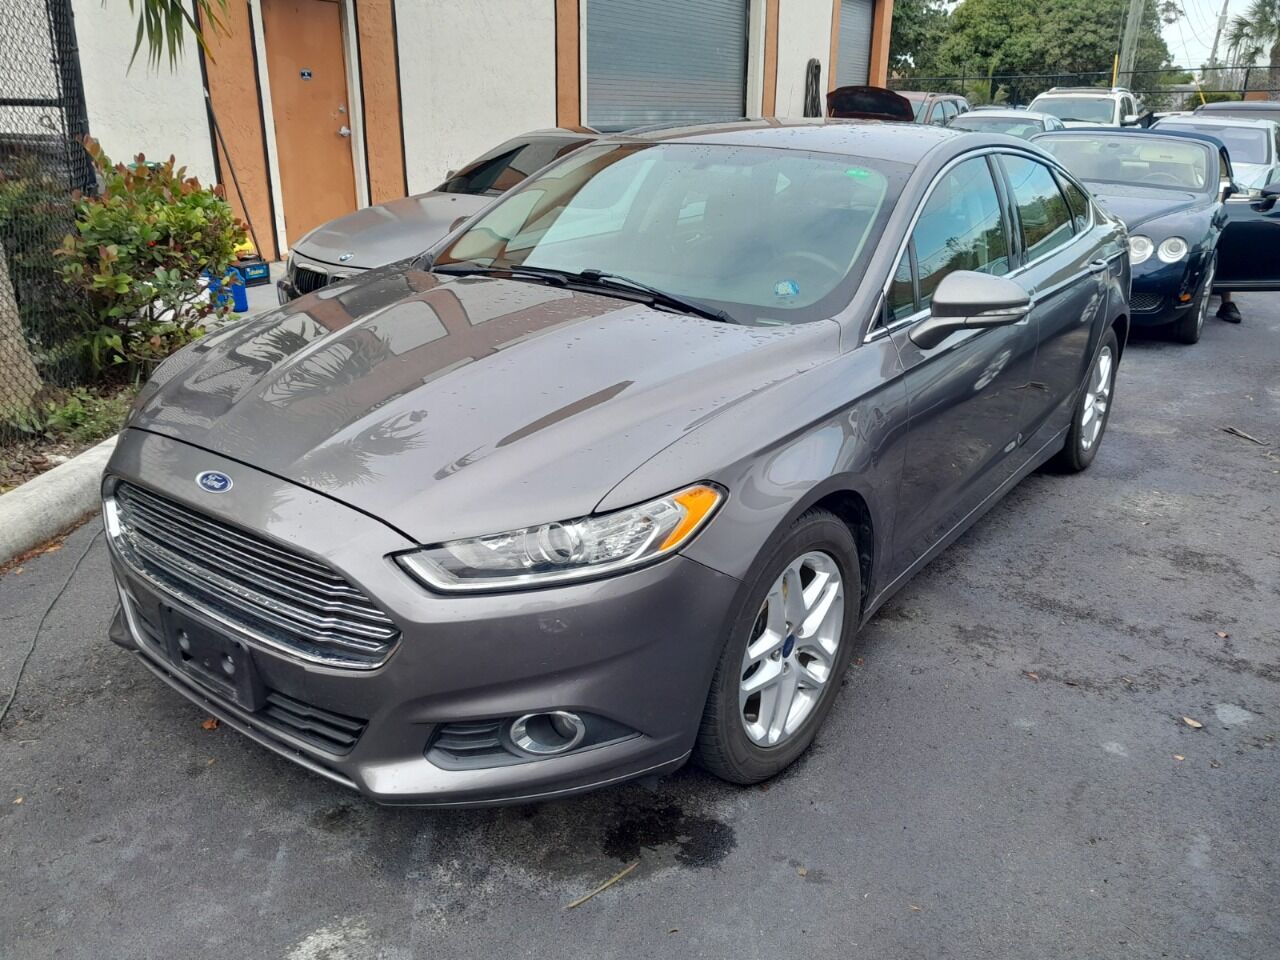 2014 Ford Fusion Sedan - $7,950